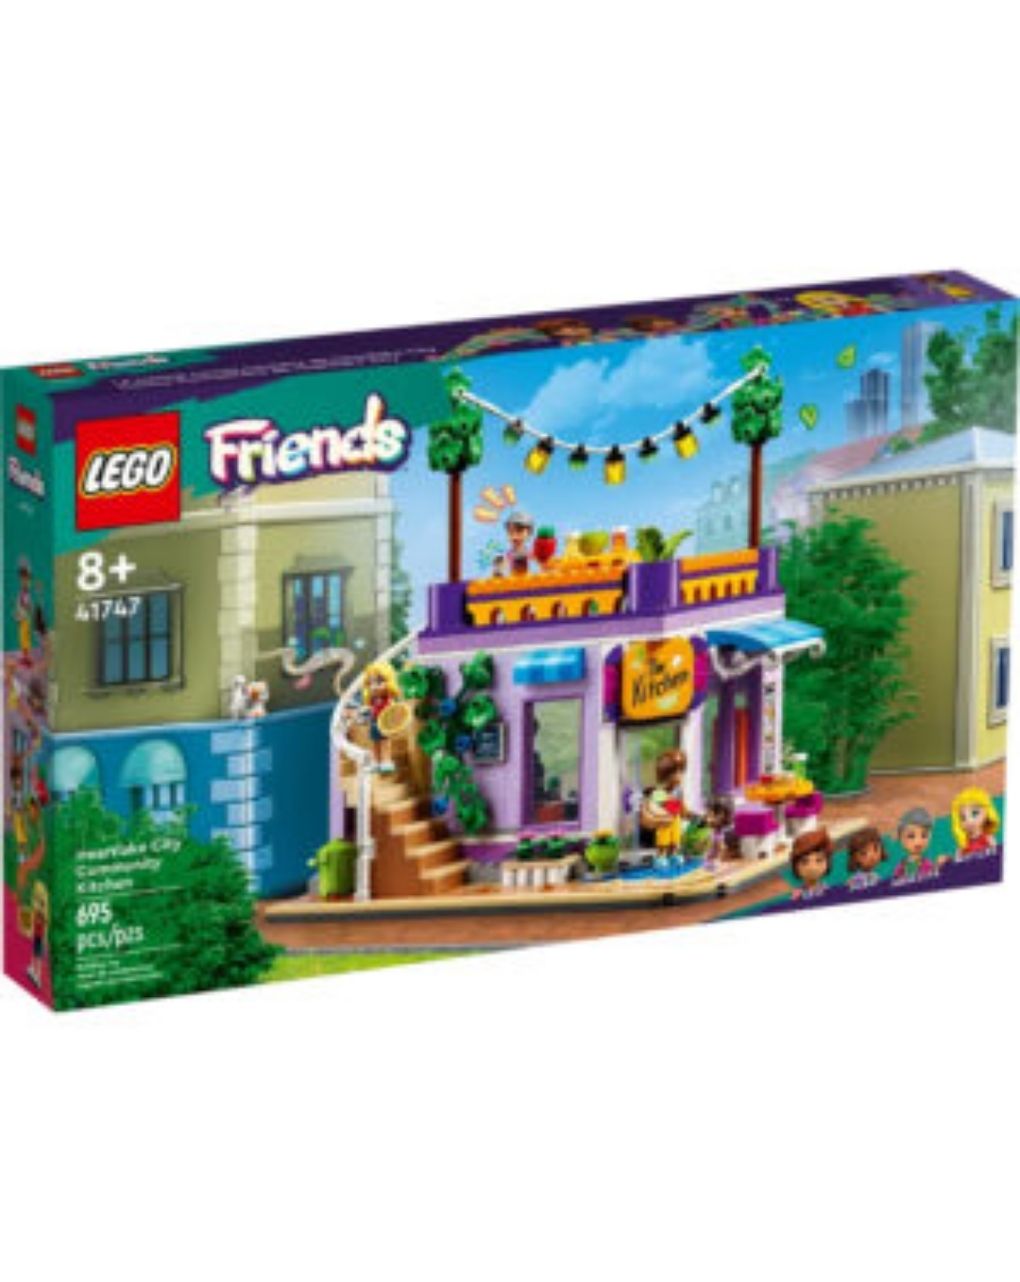 Lego friends heartlike city community kitchen 41747